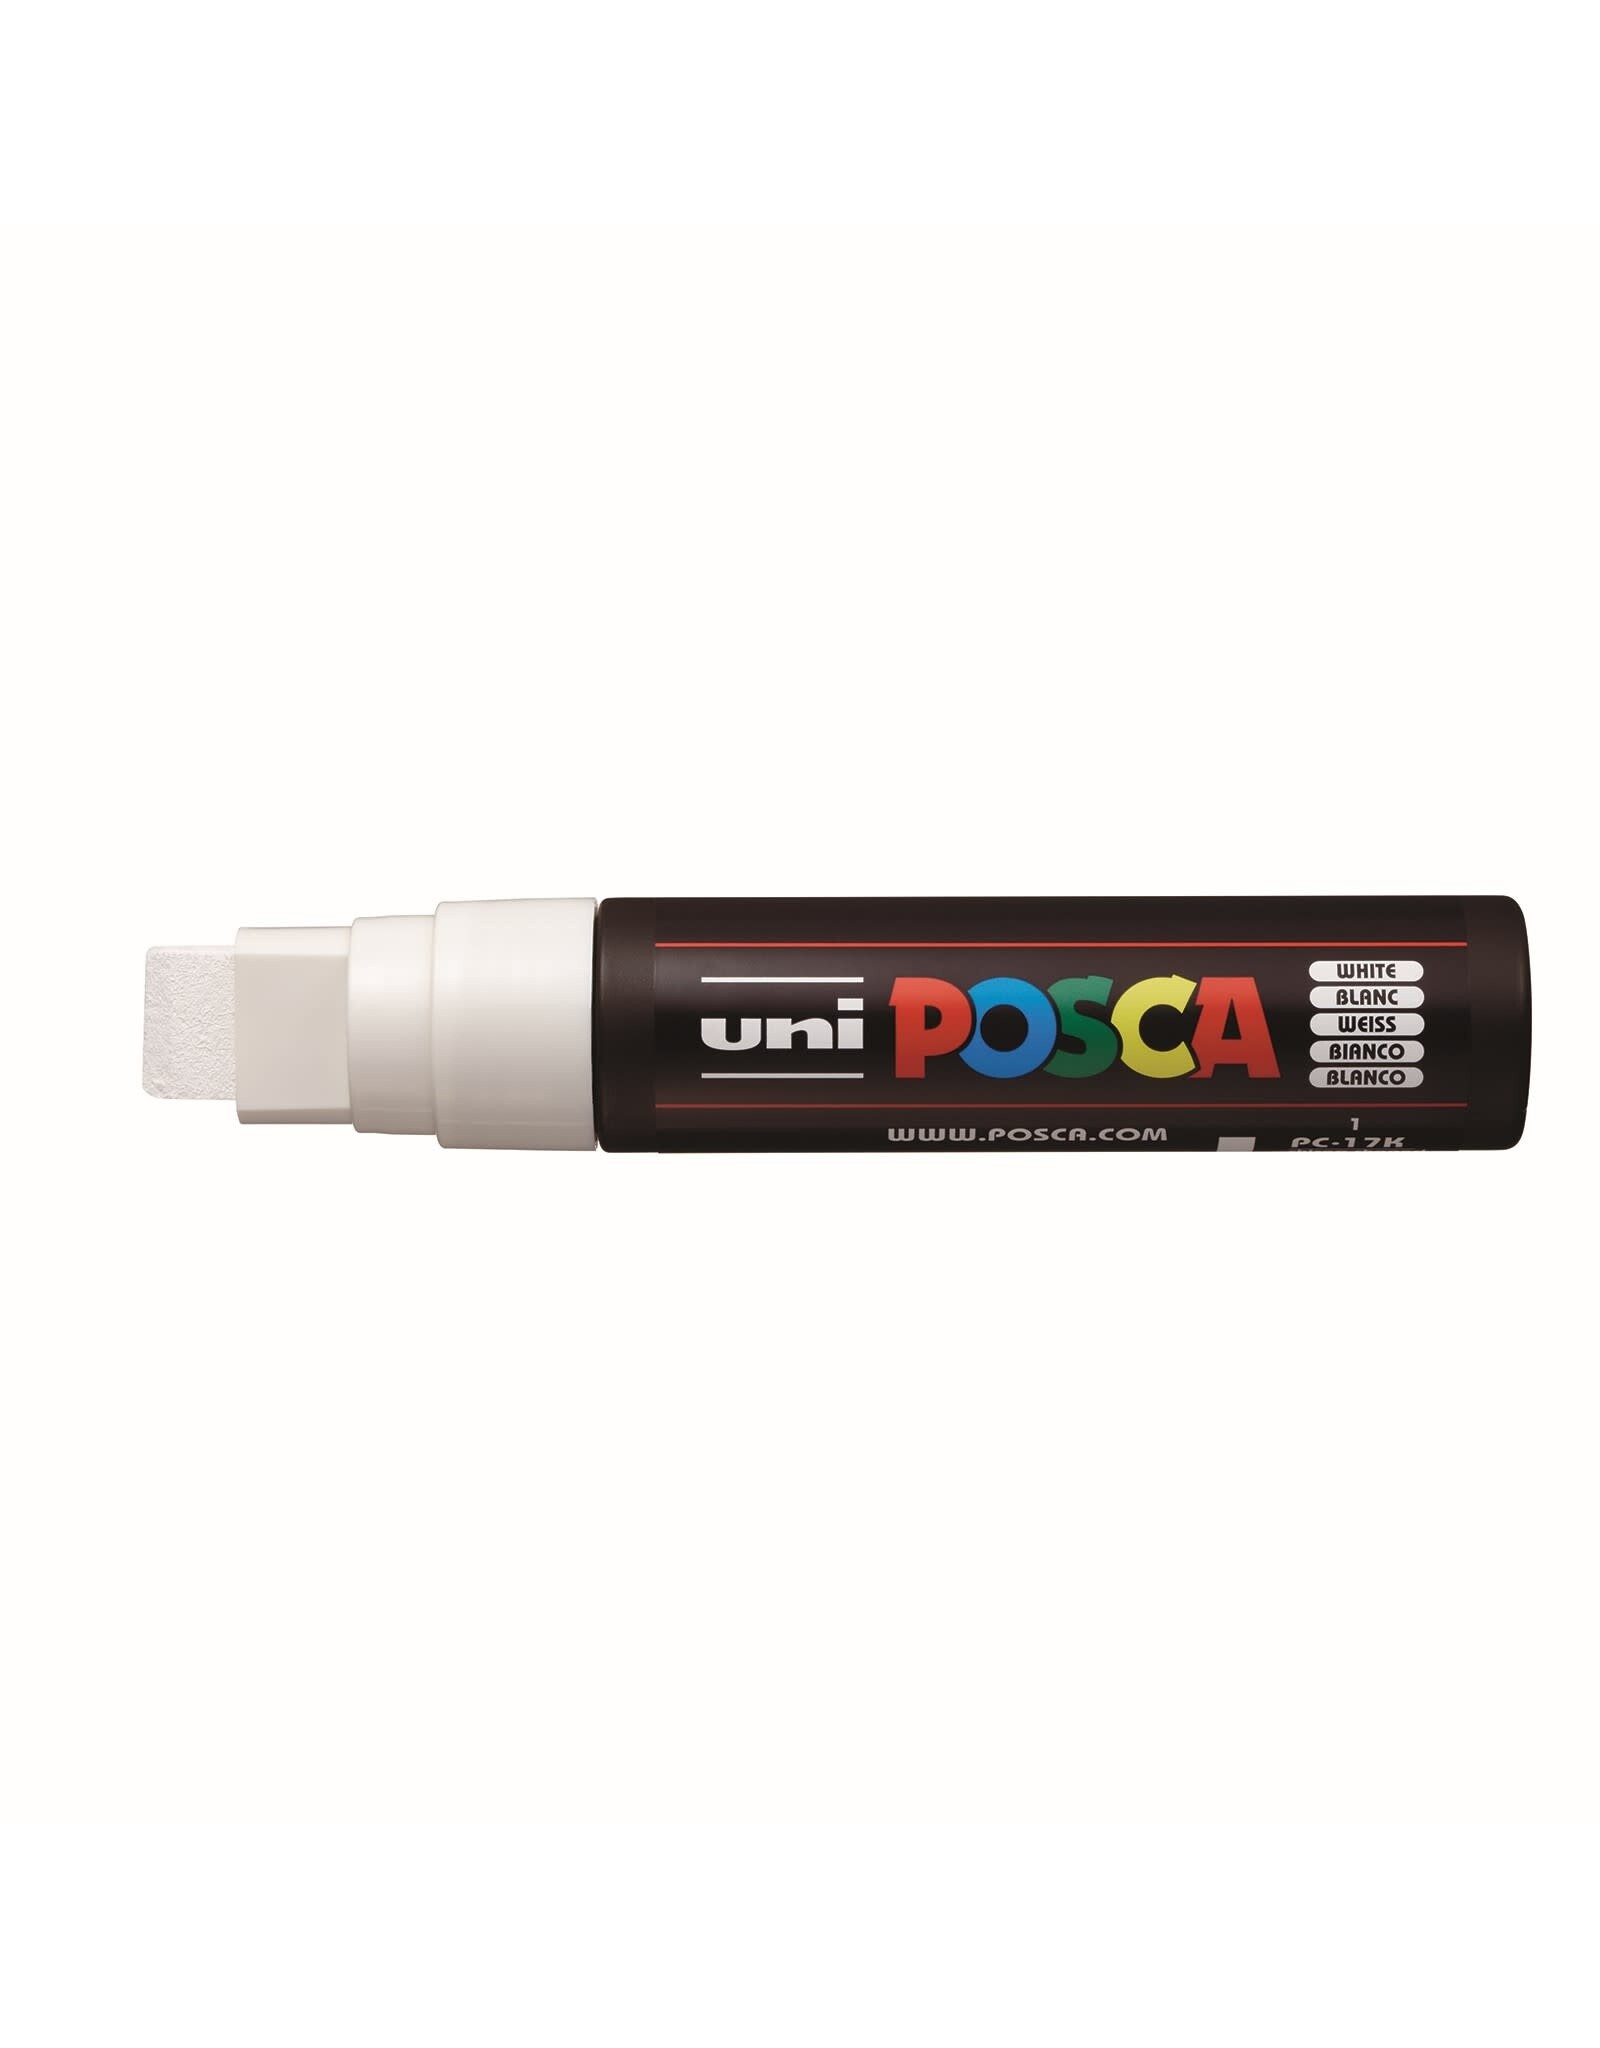 POSCA Uni POSCA Paint Marker, Extra-Broad, White